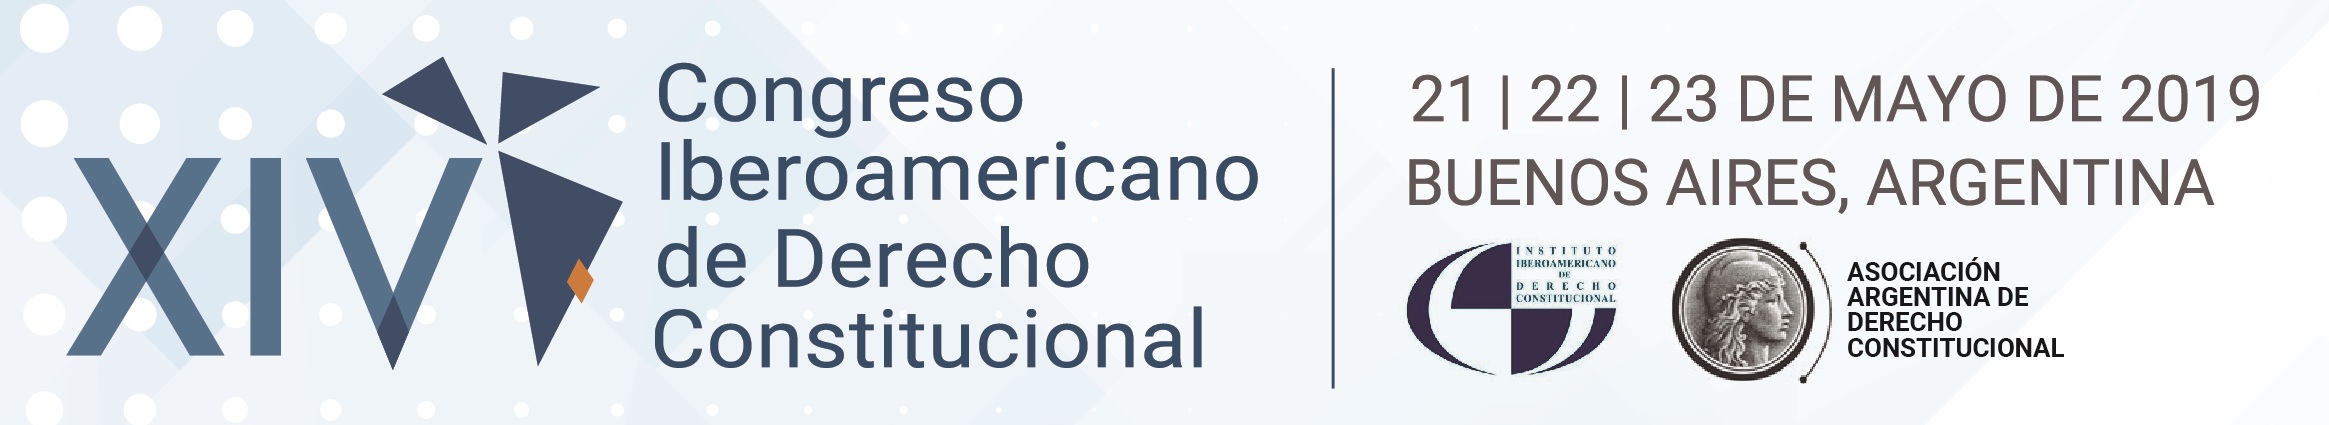 XIV Congreso Iberoamericano de Derecho Constitucional